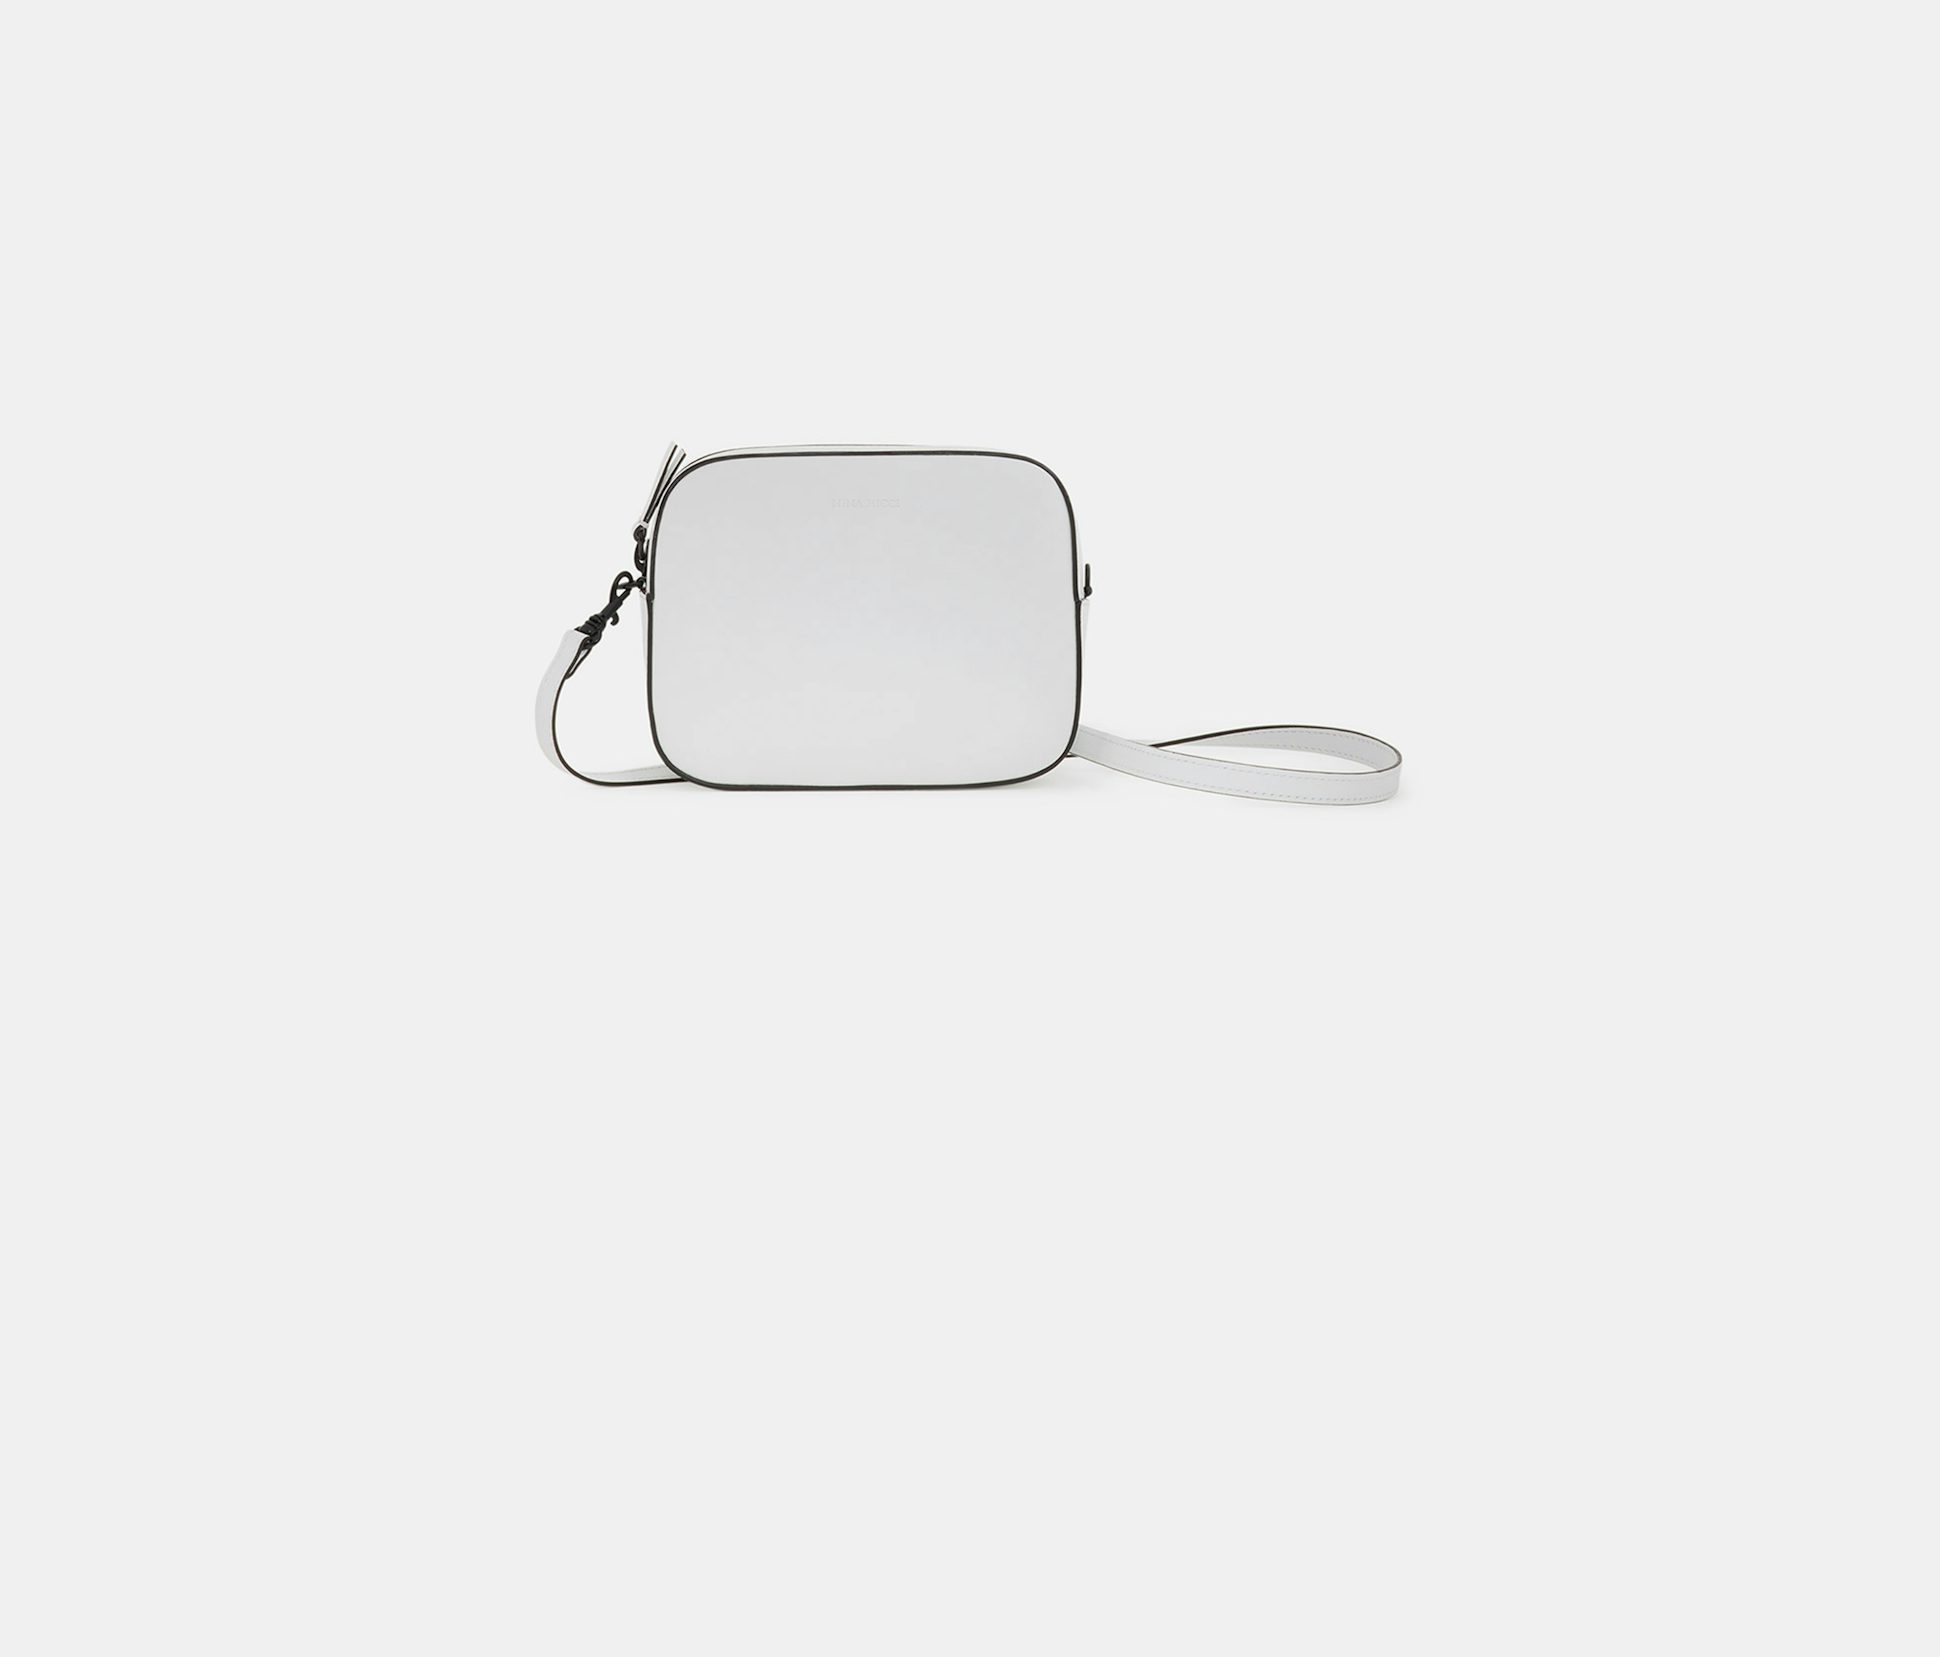 White Leather Camera Bag with Shoulder Strap - Nina Ricci